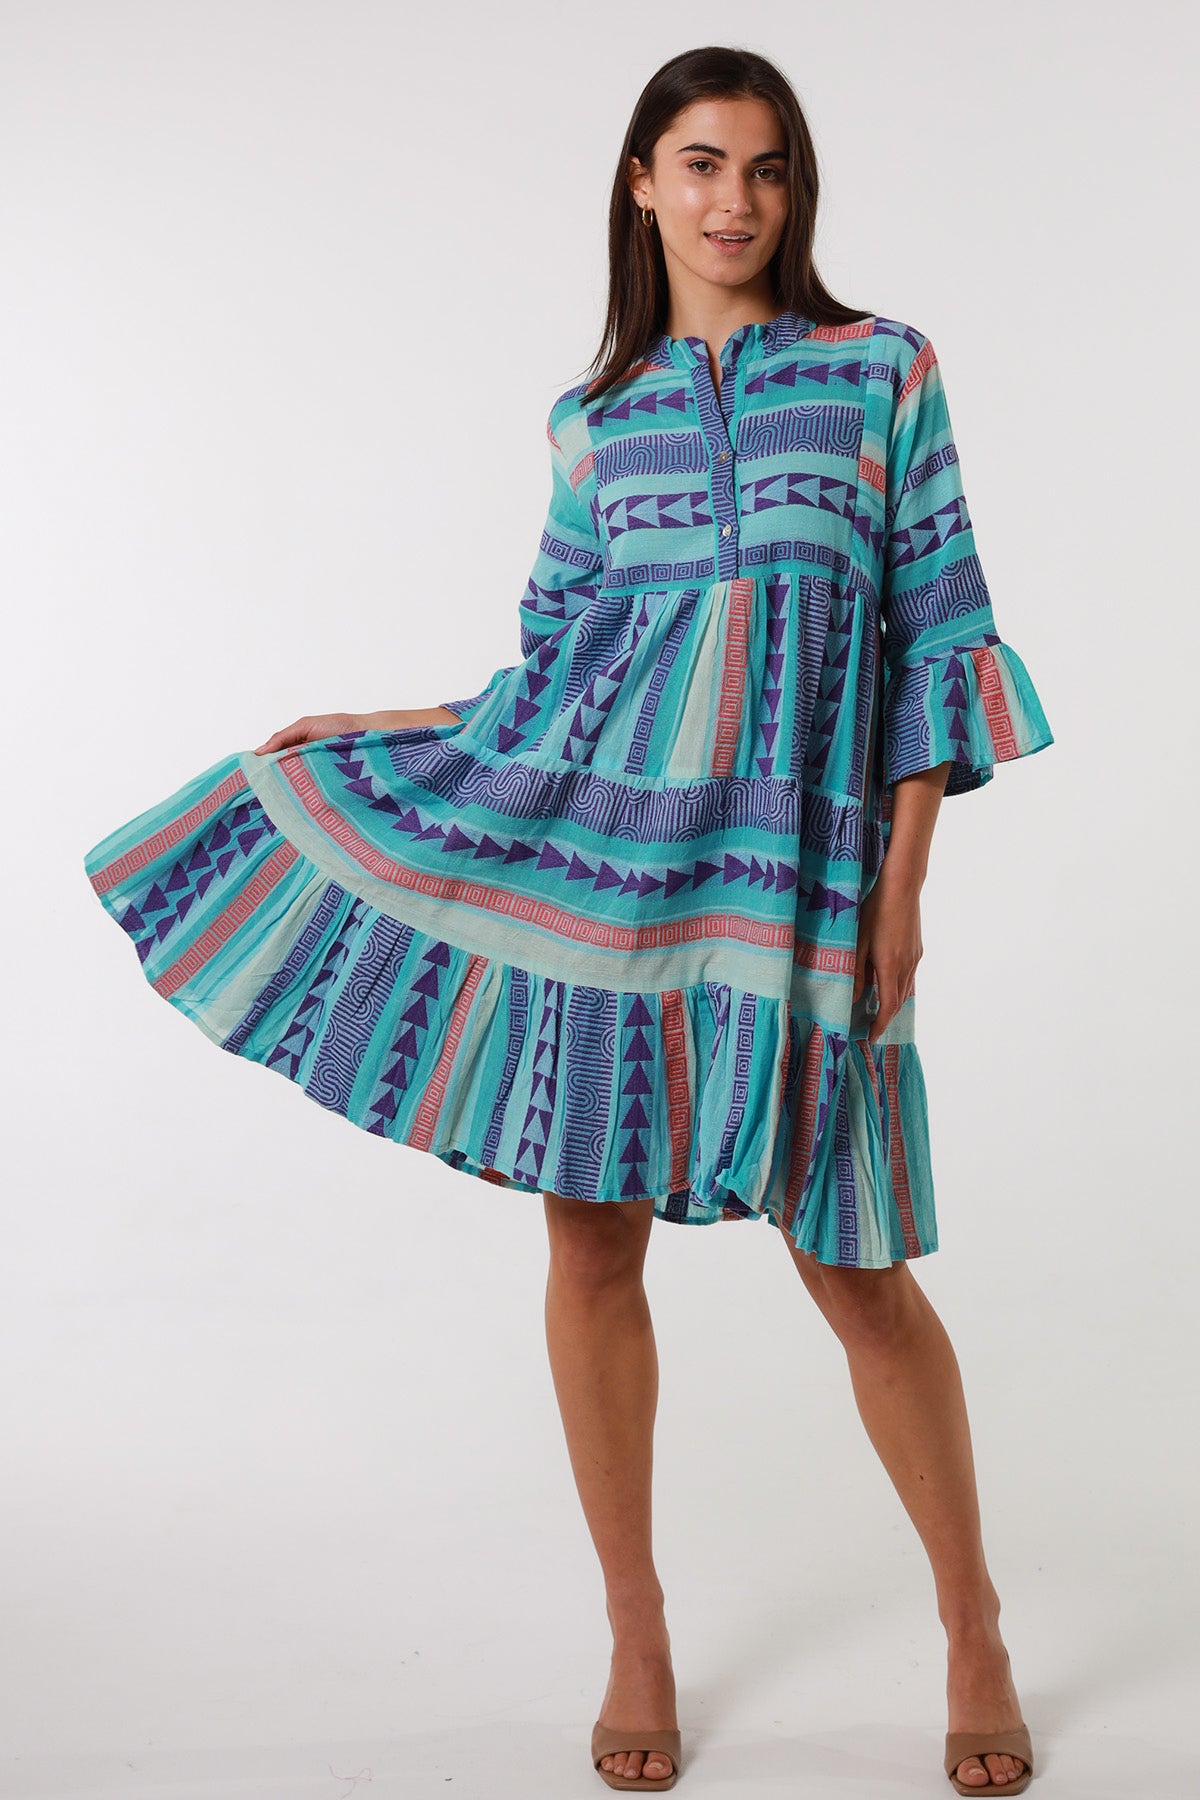 AM11901 Jacquard Cotton Dress